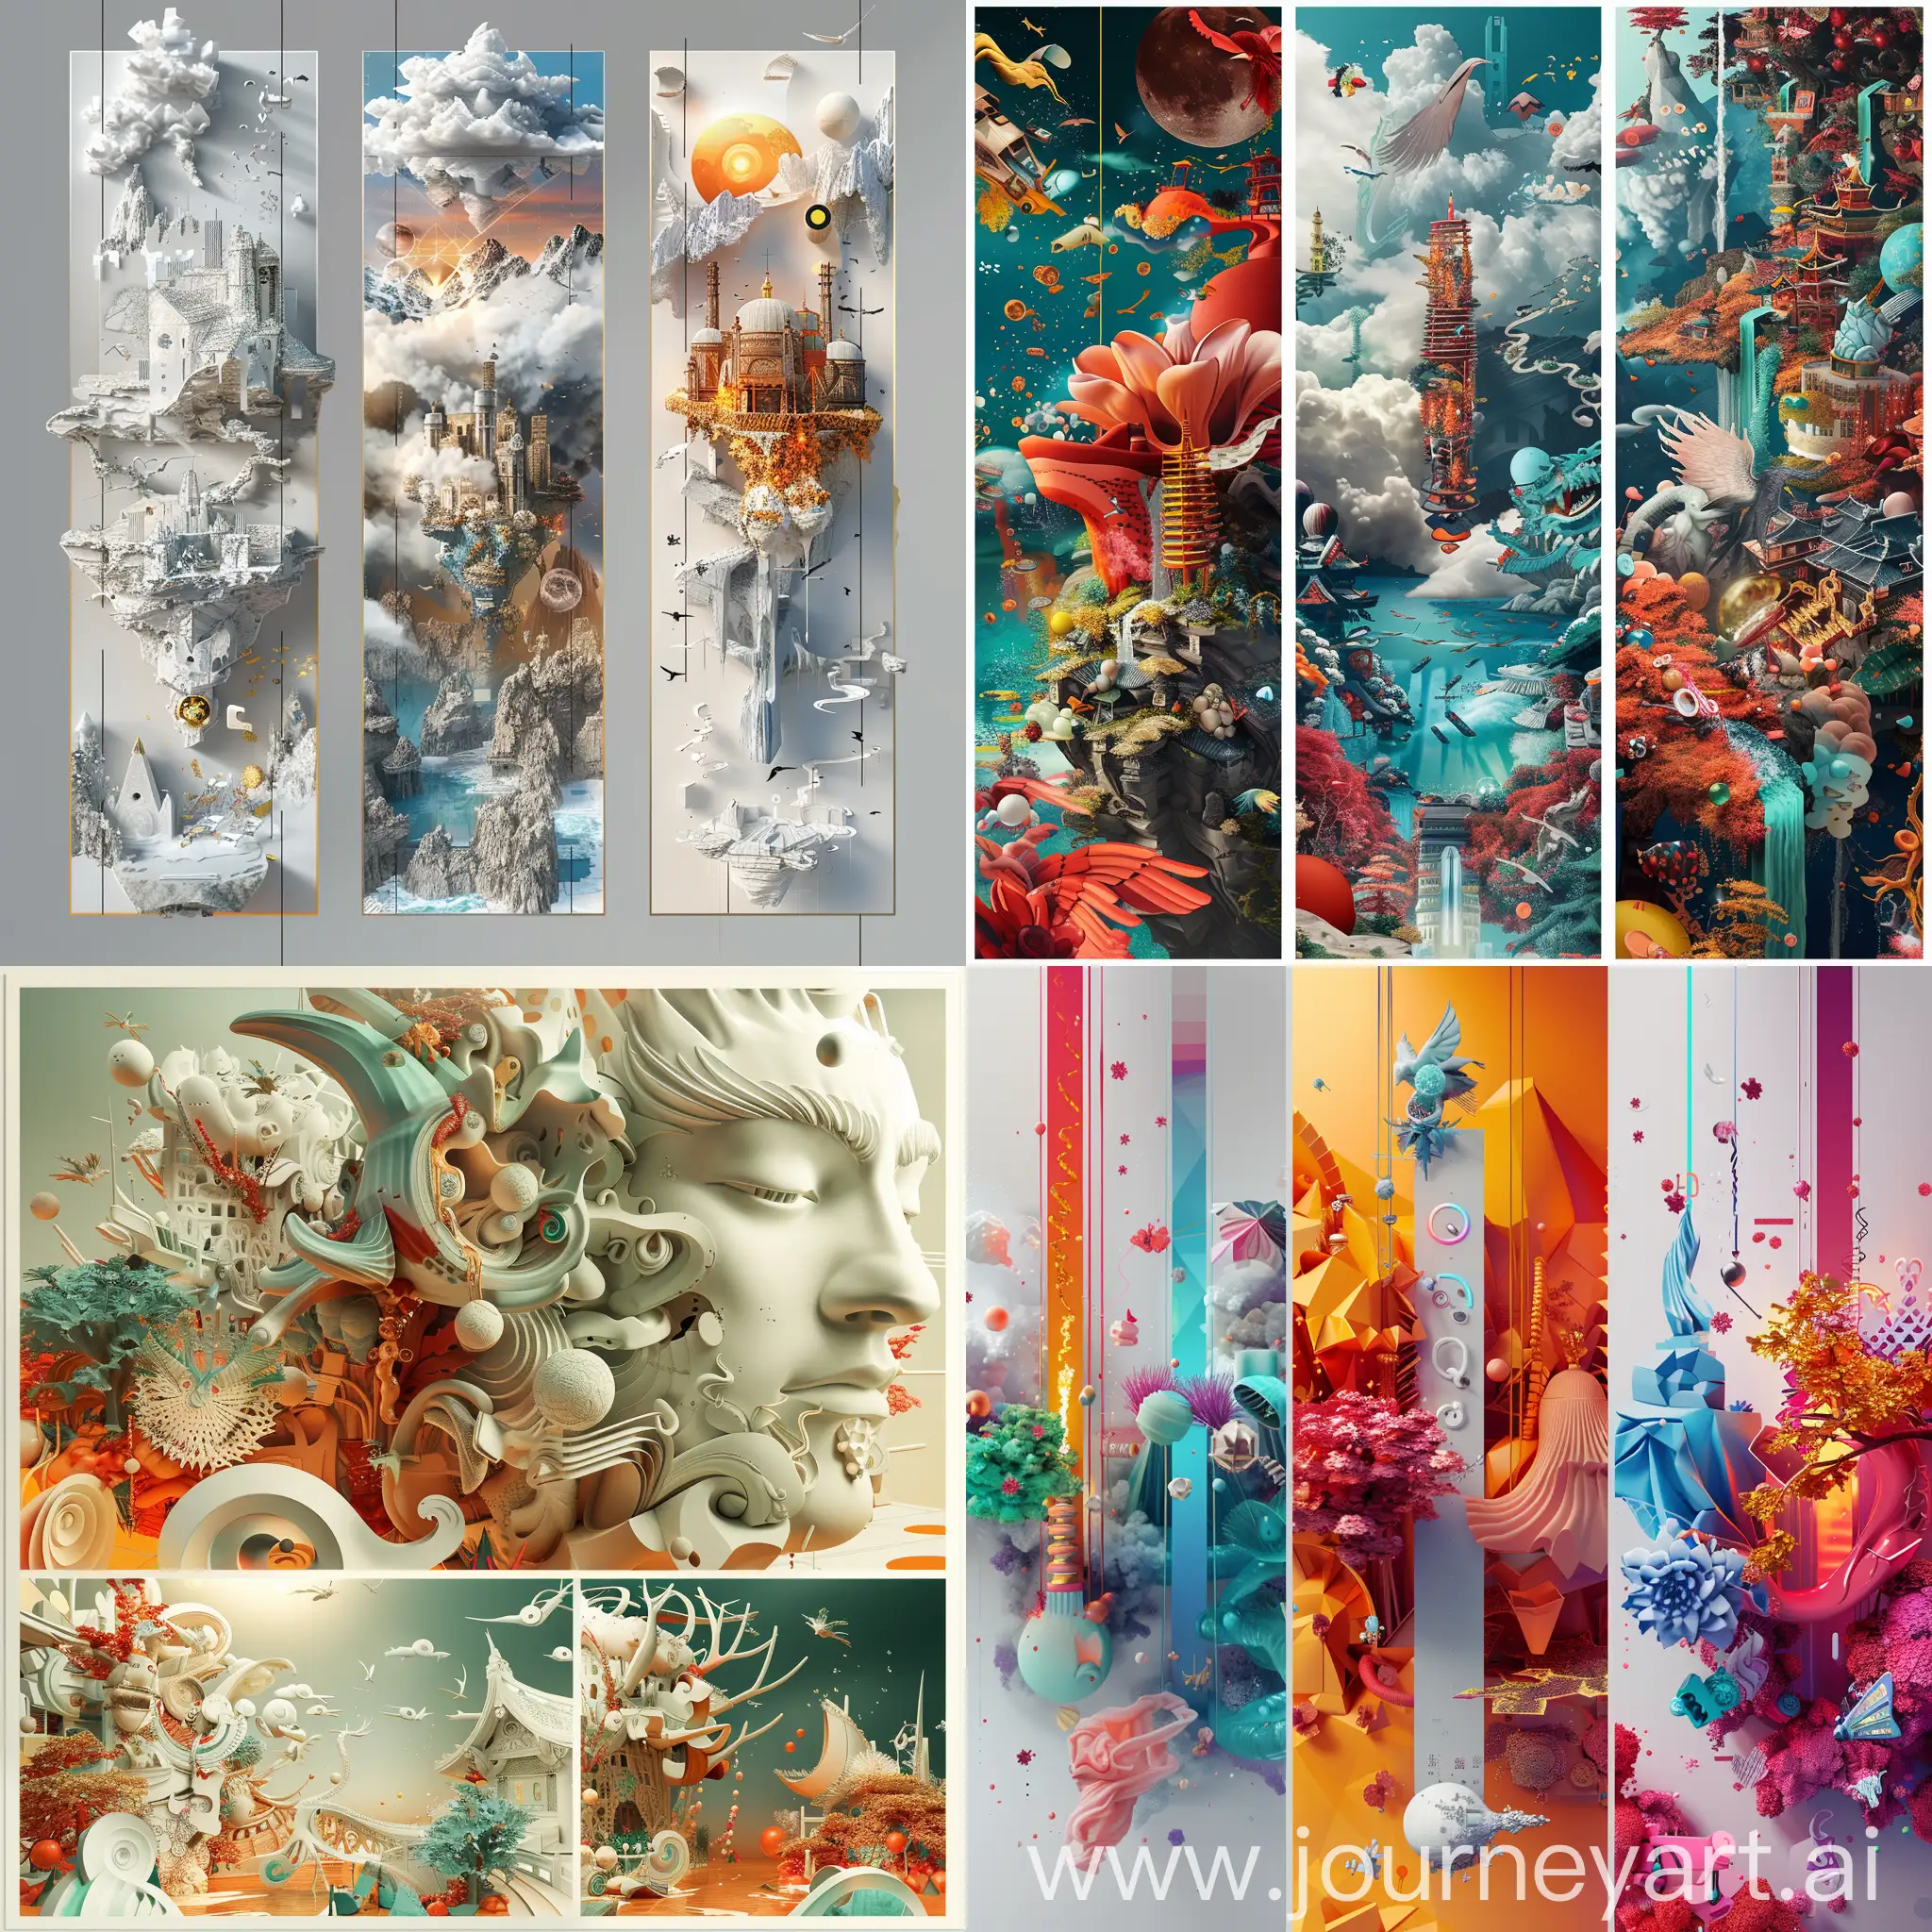 CuttingEdge-3D-Illustration-Triptych-Exploring-Design-Techniques-and-Vision